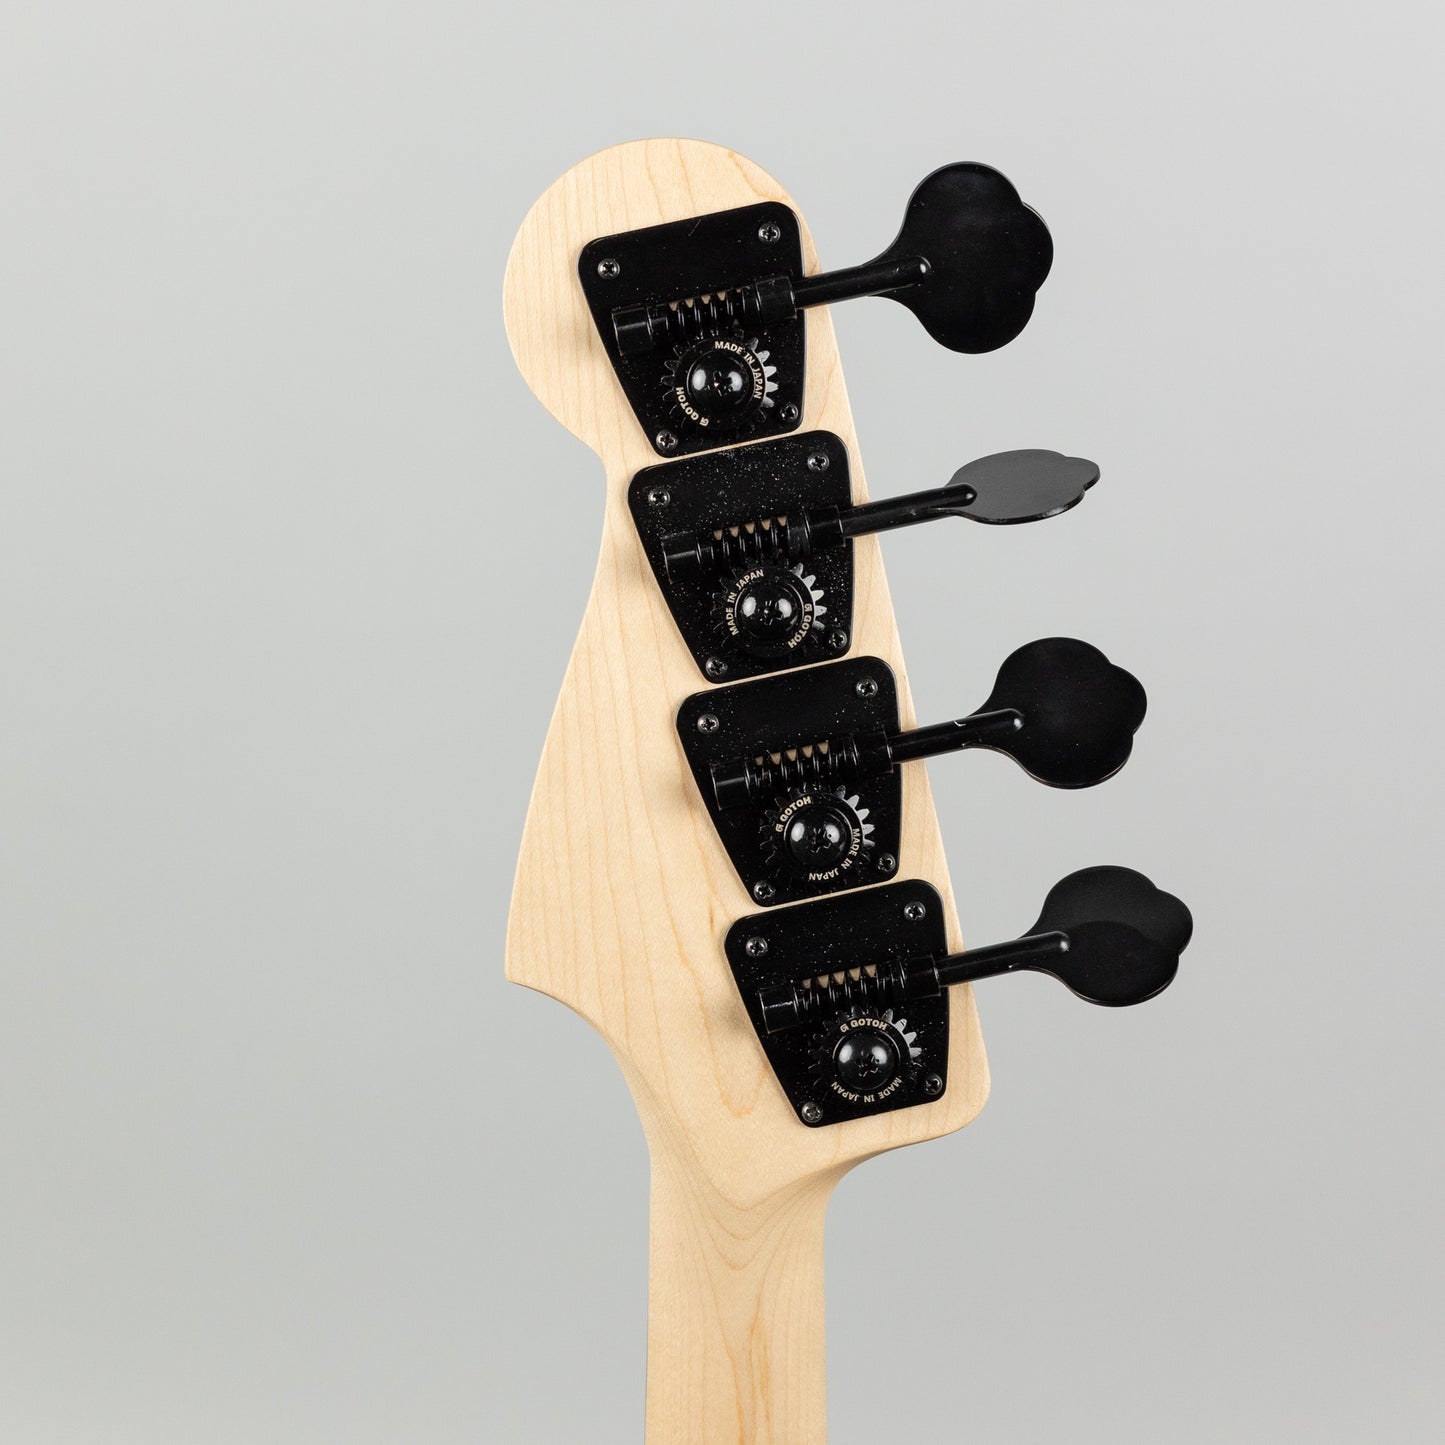 Fender MIJ Boxer Series Precision Bass in Torino Red